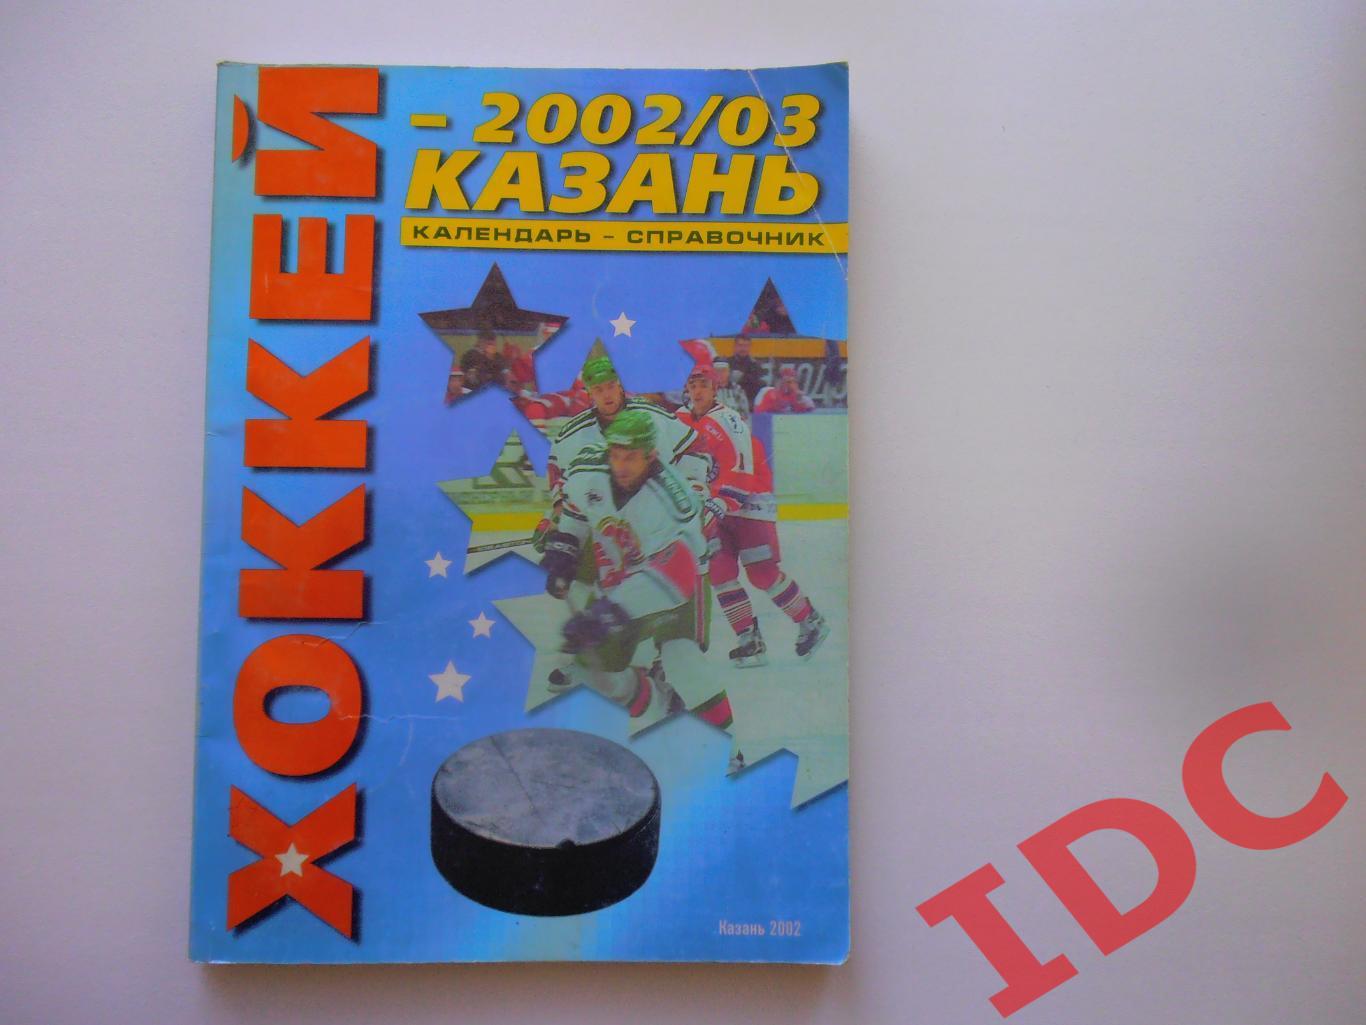 Хоккей Казань 2002/03